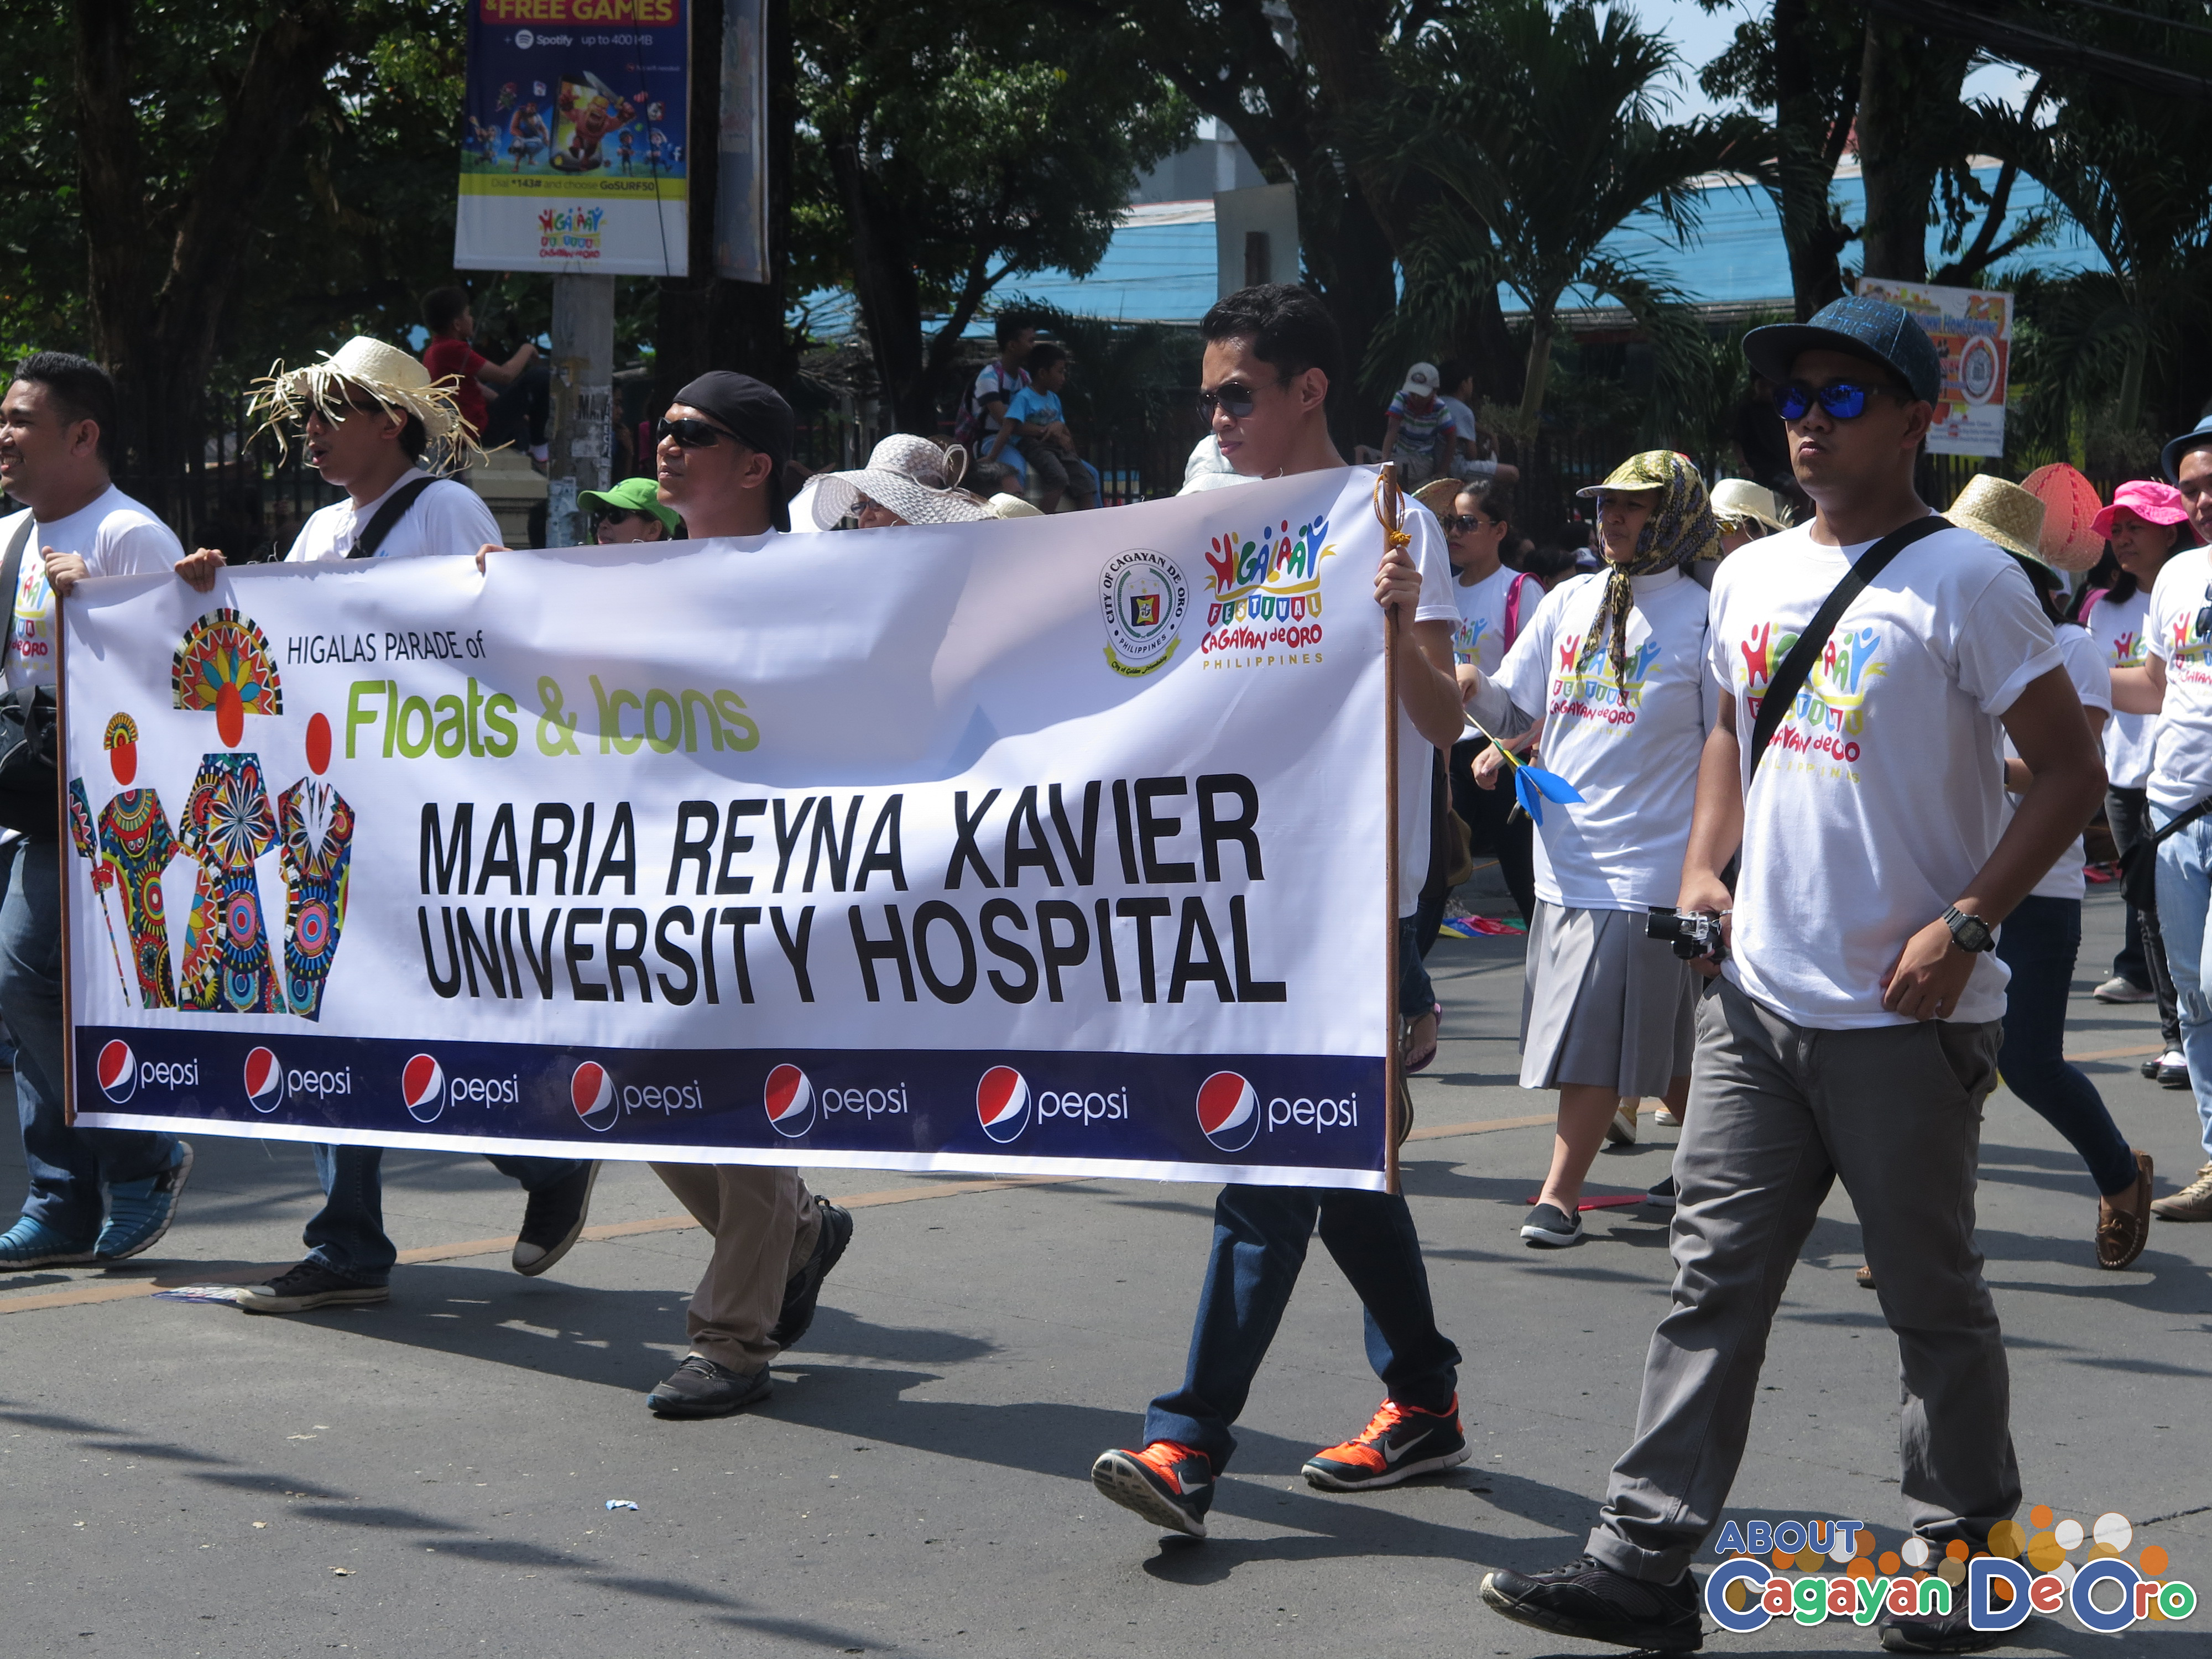 Maria Reyna Xavier Hospital at Cagayan de Oro The Higalas Parade of Floats and Icons 2015